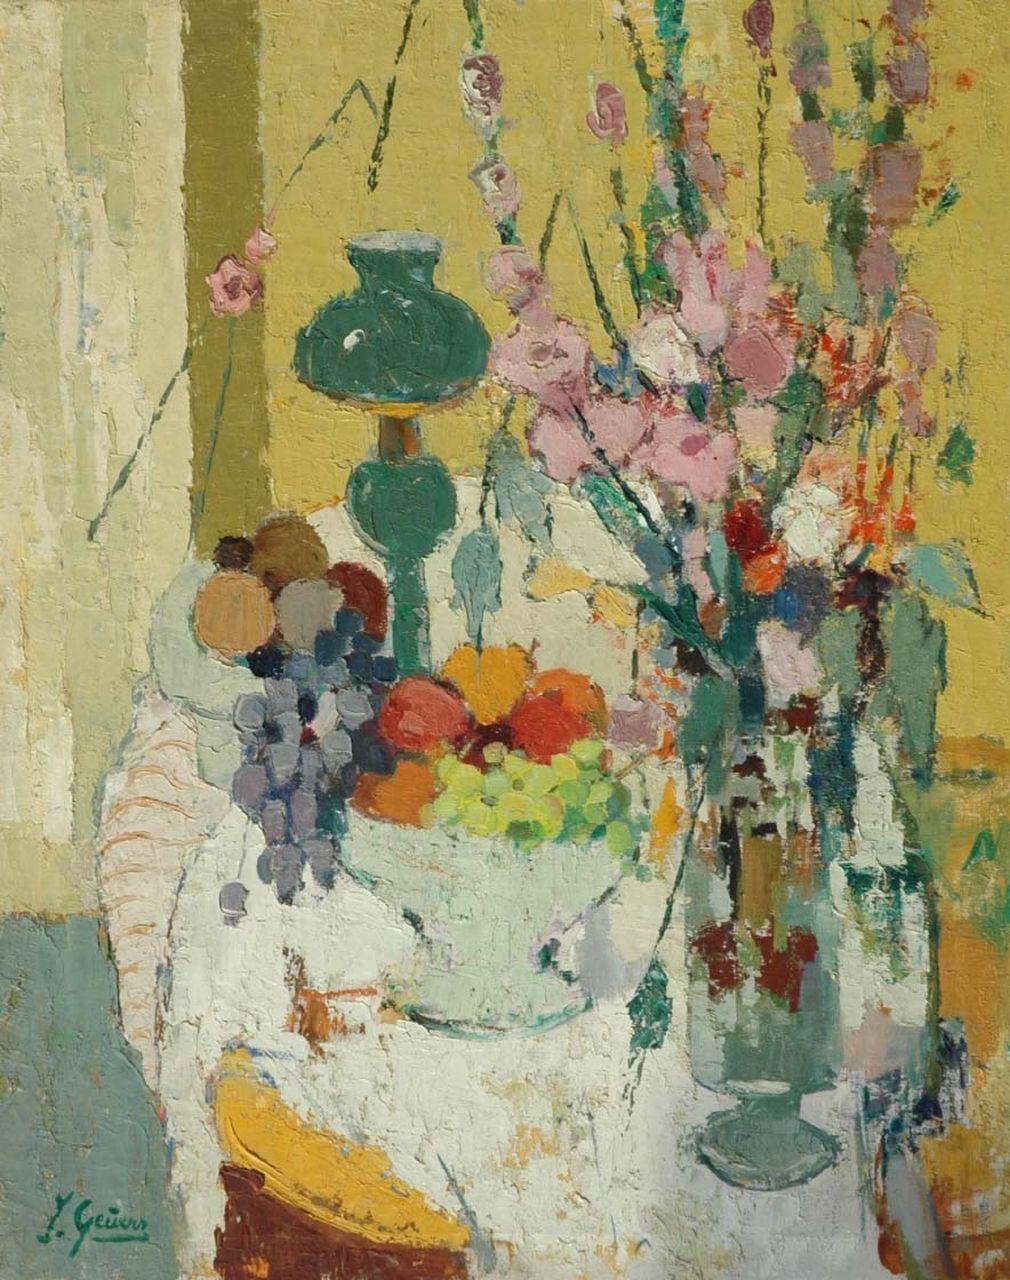 Geuens J.  | Jacques Geuens, A still life with fruits and flowers, oil on canvas 99.3 x 79.8 cm, signed l.l.